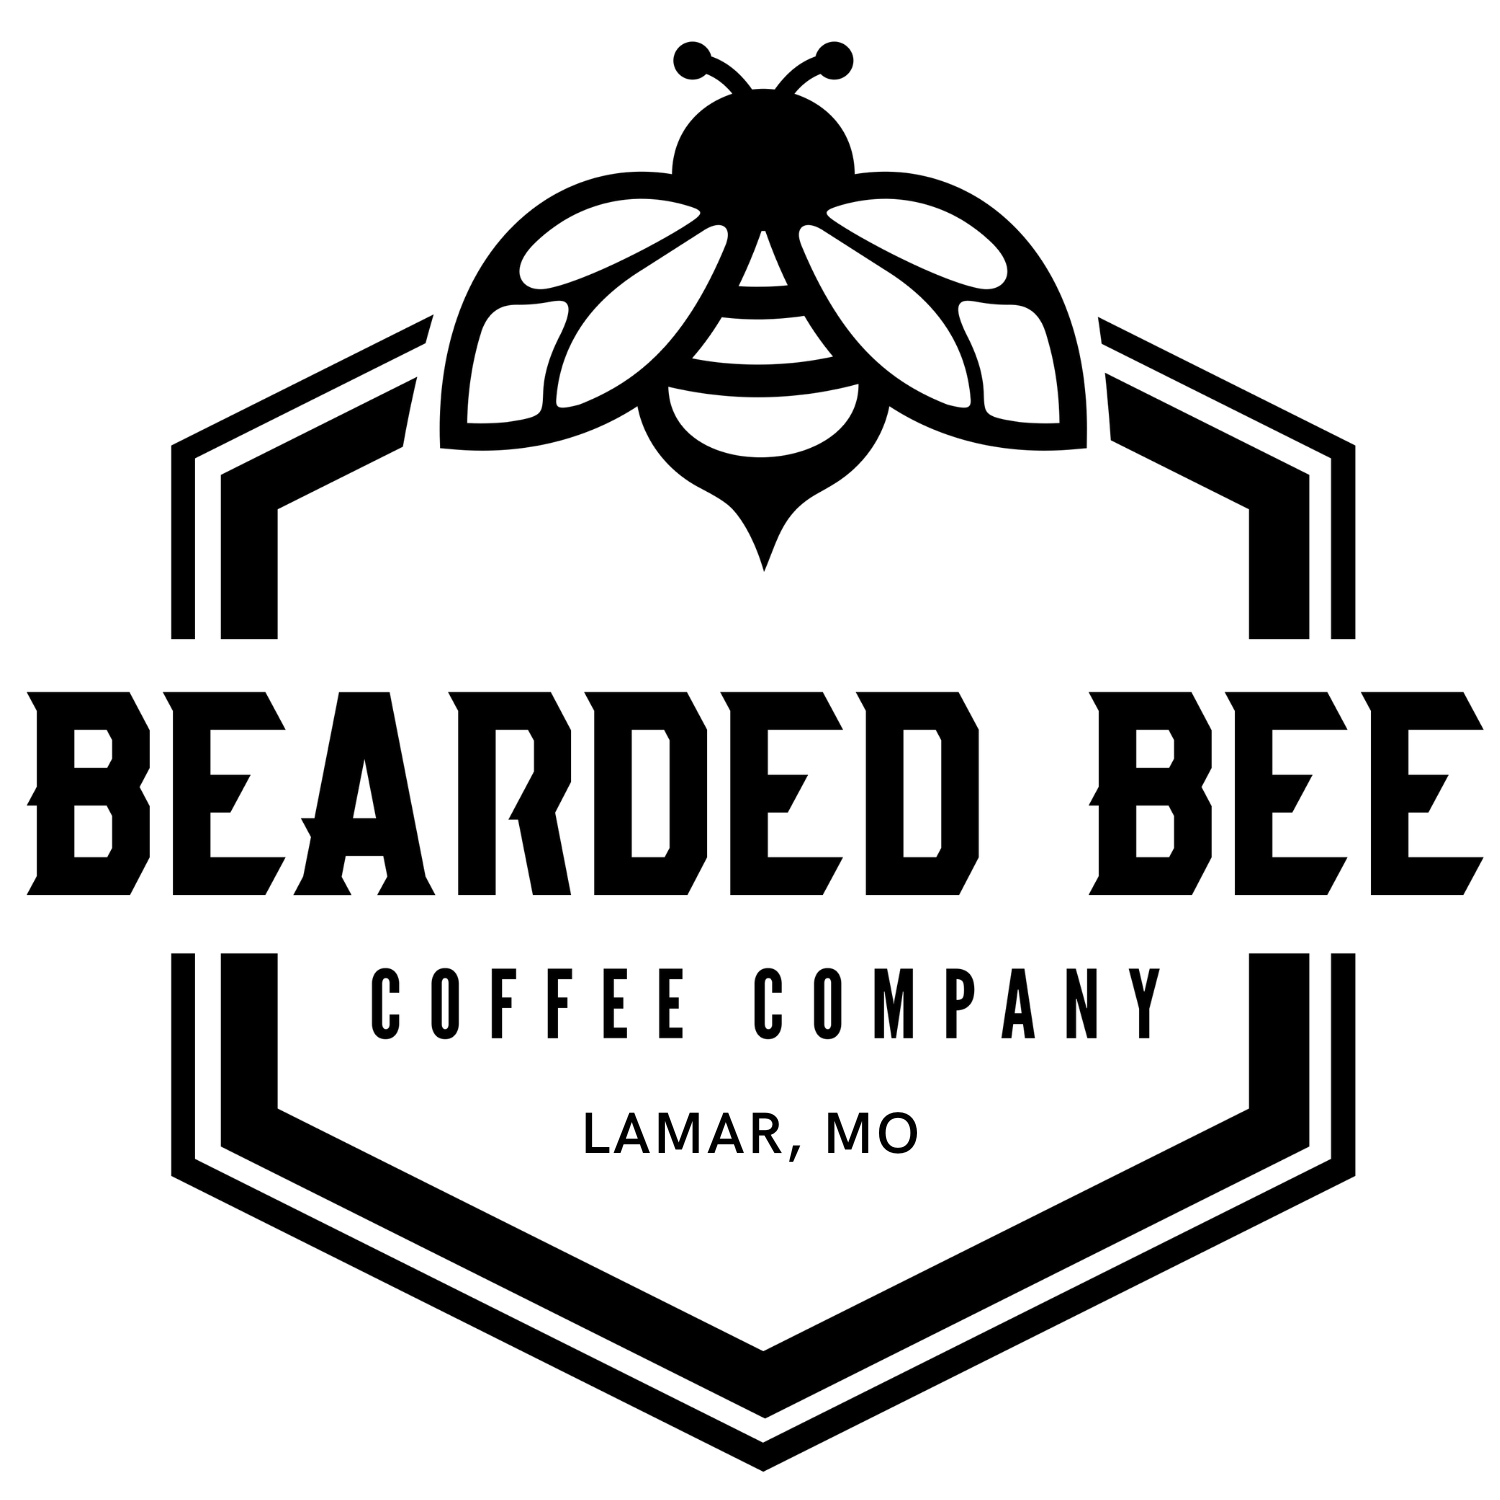 Bearded Bee Coffee Company logo 